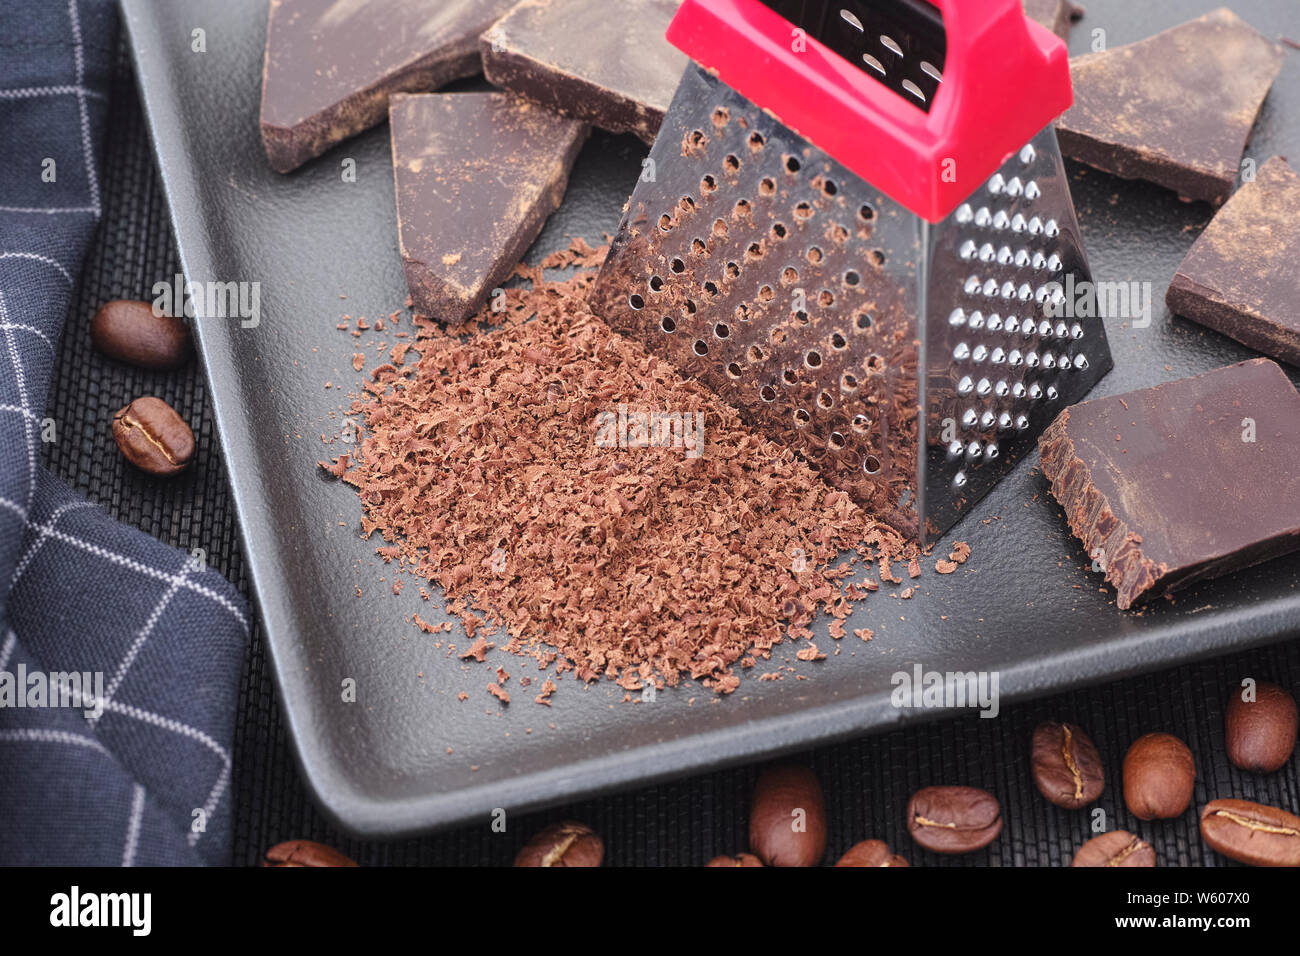 https://c8.alamy.com/comp/W607X0/grated-dark-chocolate-and-coffee-beans-W607X0.jpg